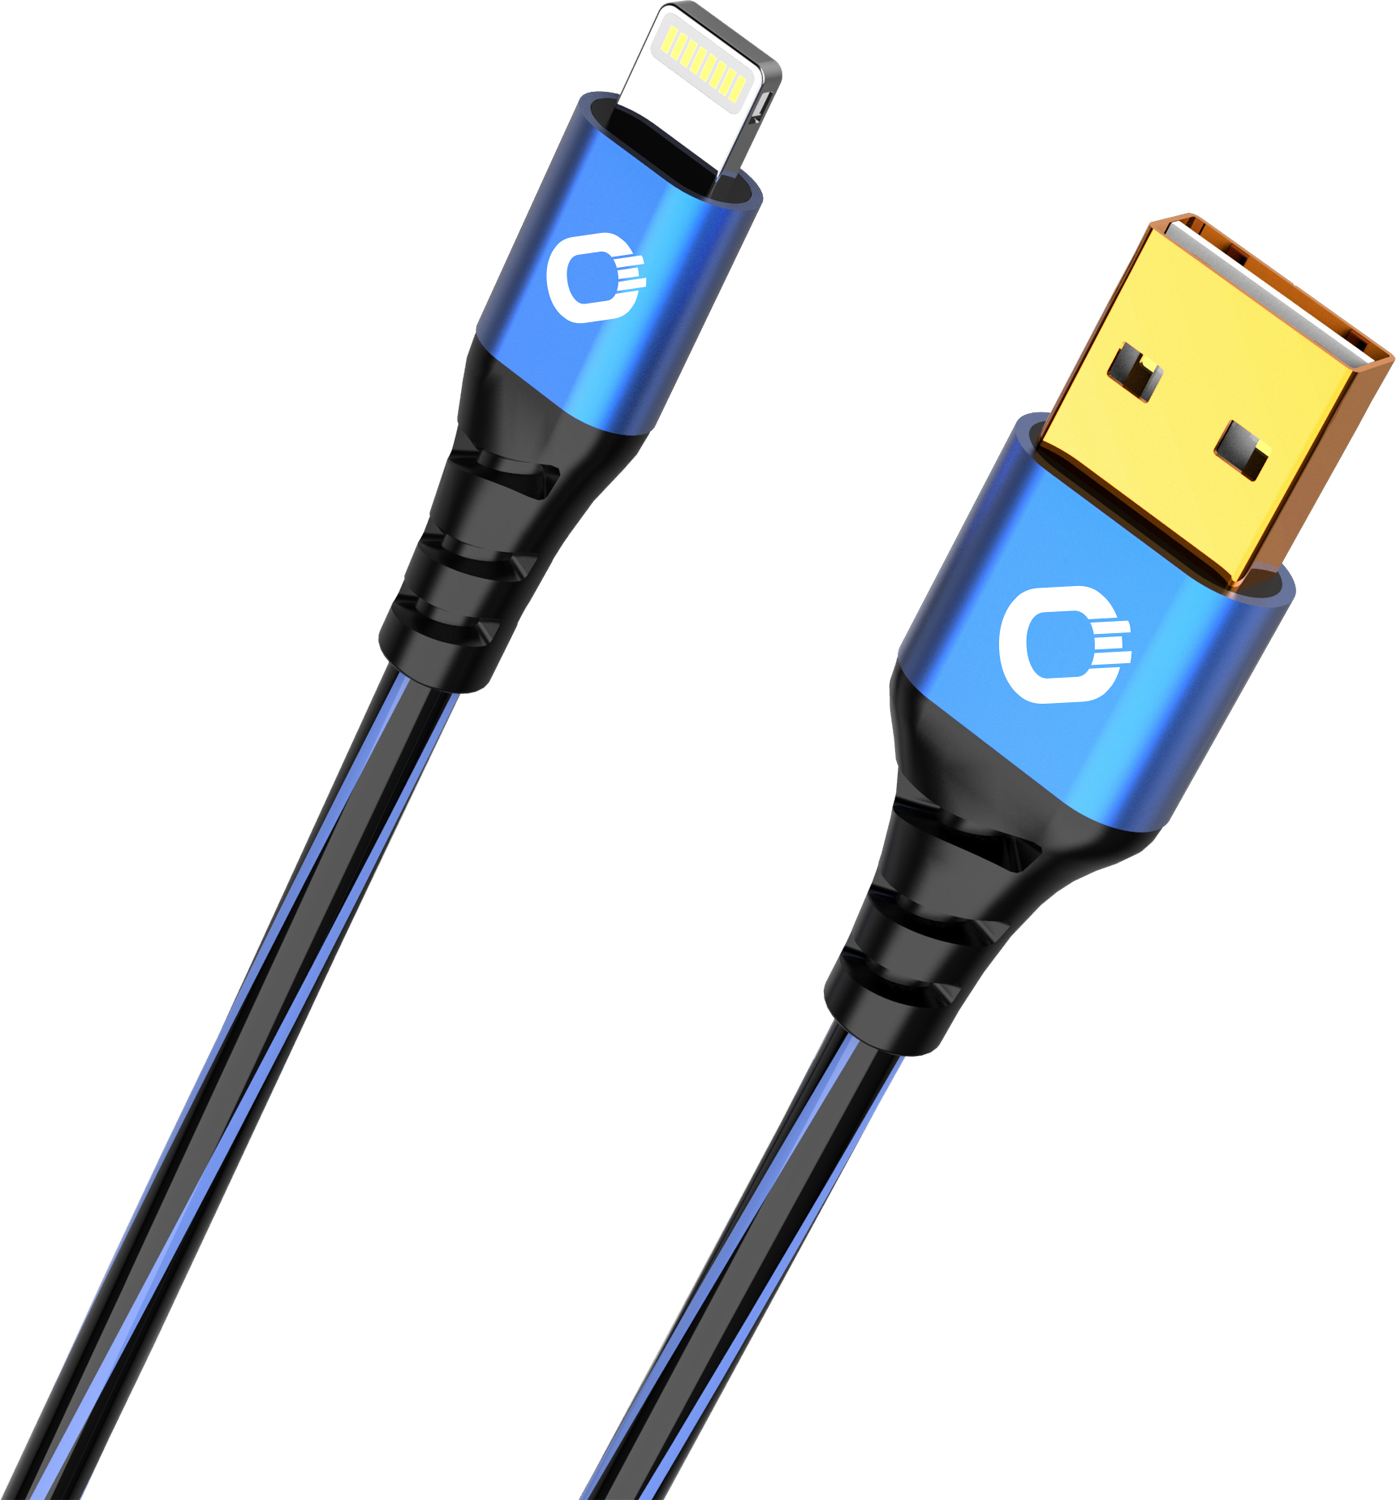 passend Kabel APPLE USB-A USB LIGHTNING 0,50M PLUS 9321 Apple für: AUF Schwarz/Blau OEHLBACH Lightning